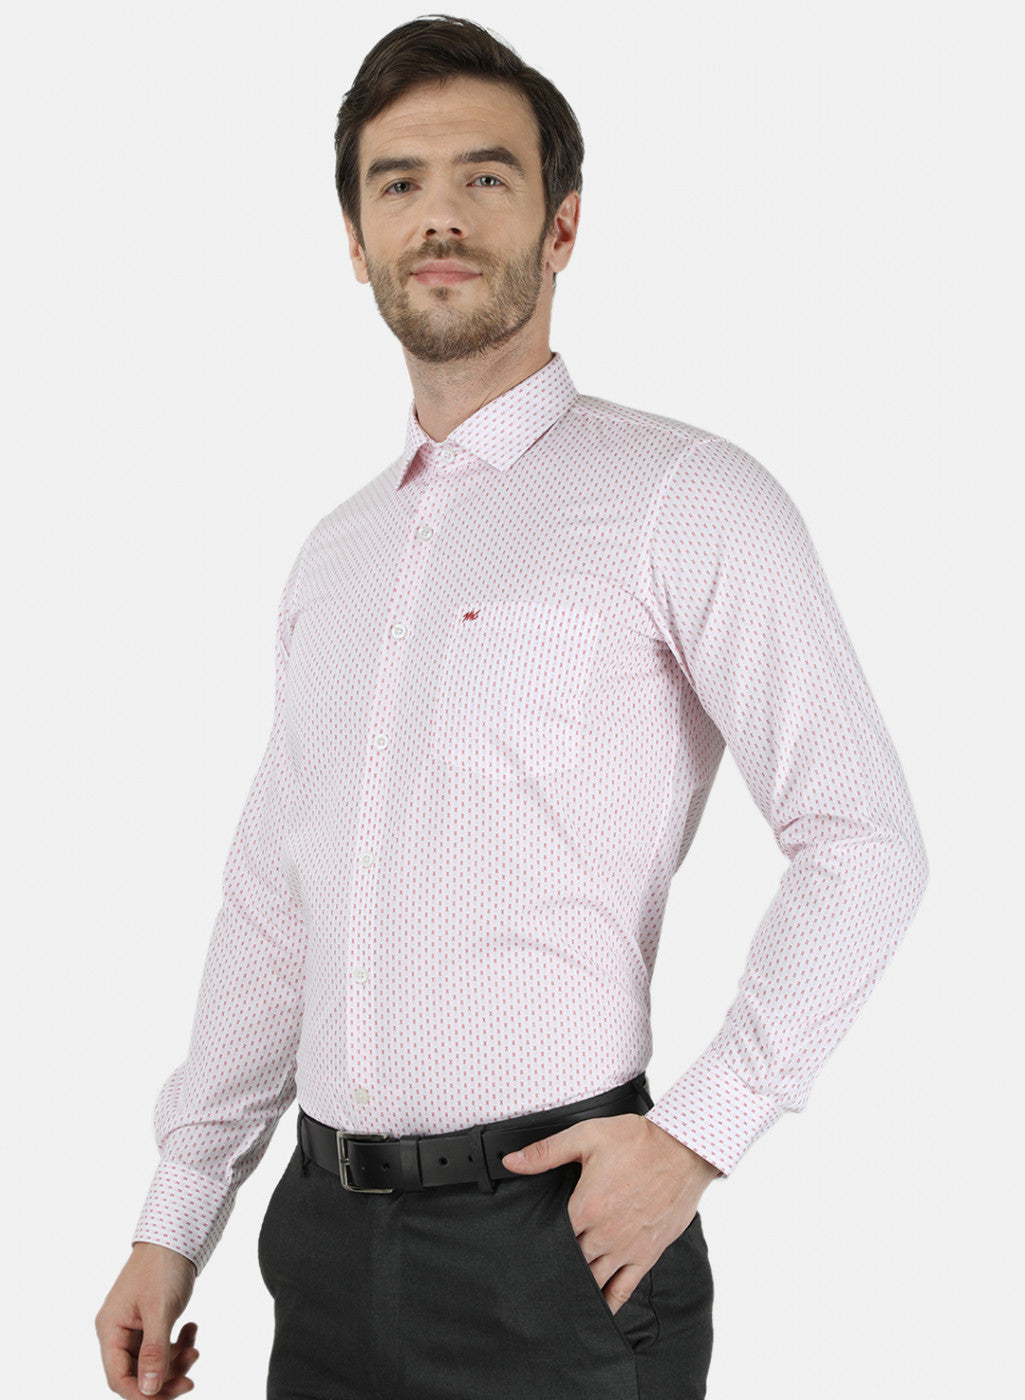 Mens Pink Printed Shirt